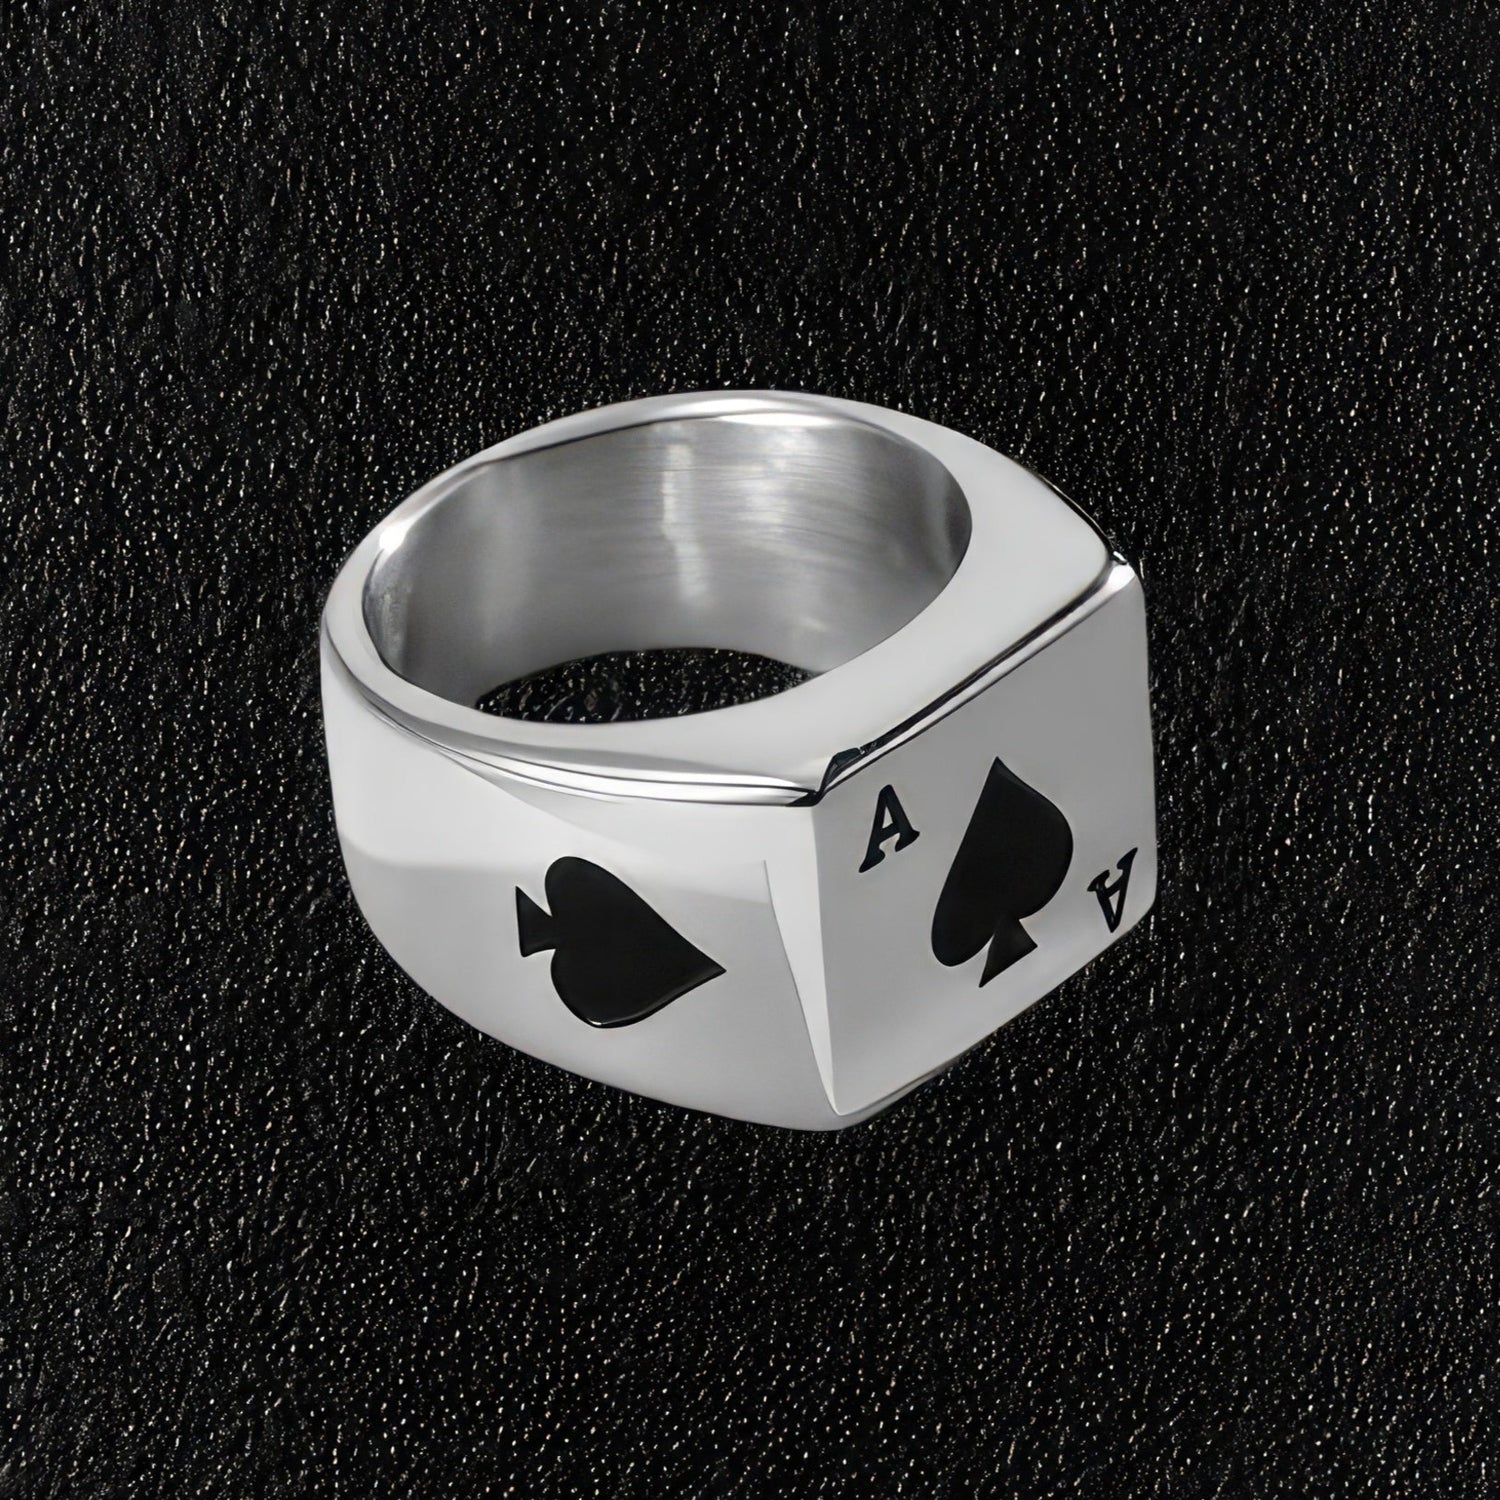 Men's Ace of Spades Signet Ring